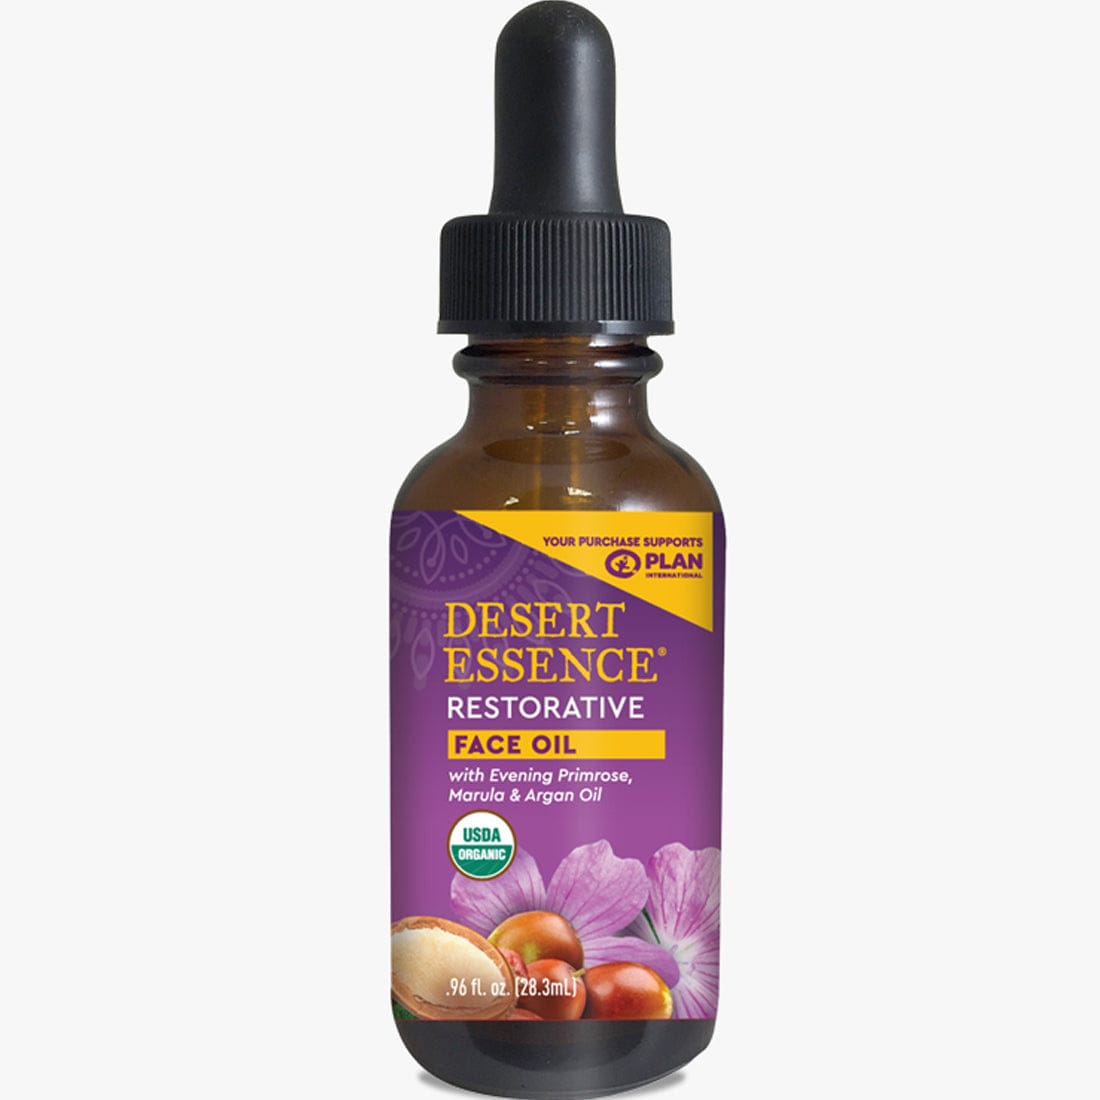 Desert Essence Restorative Face Oil, 28ml